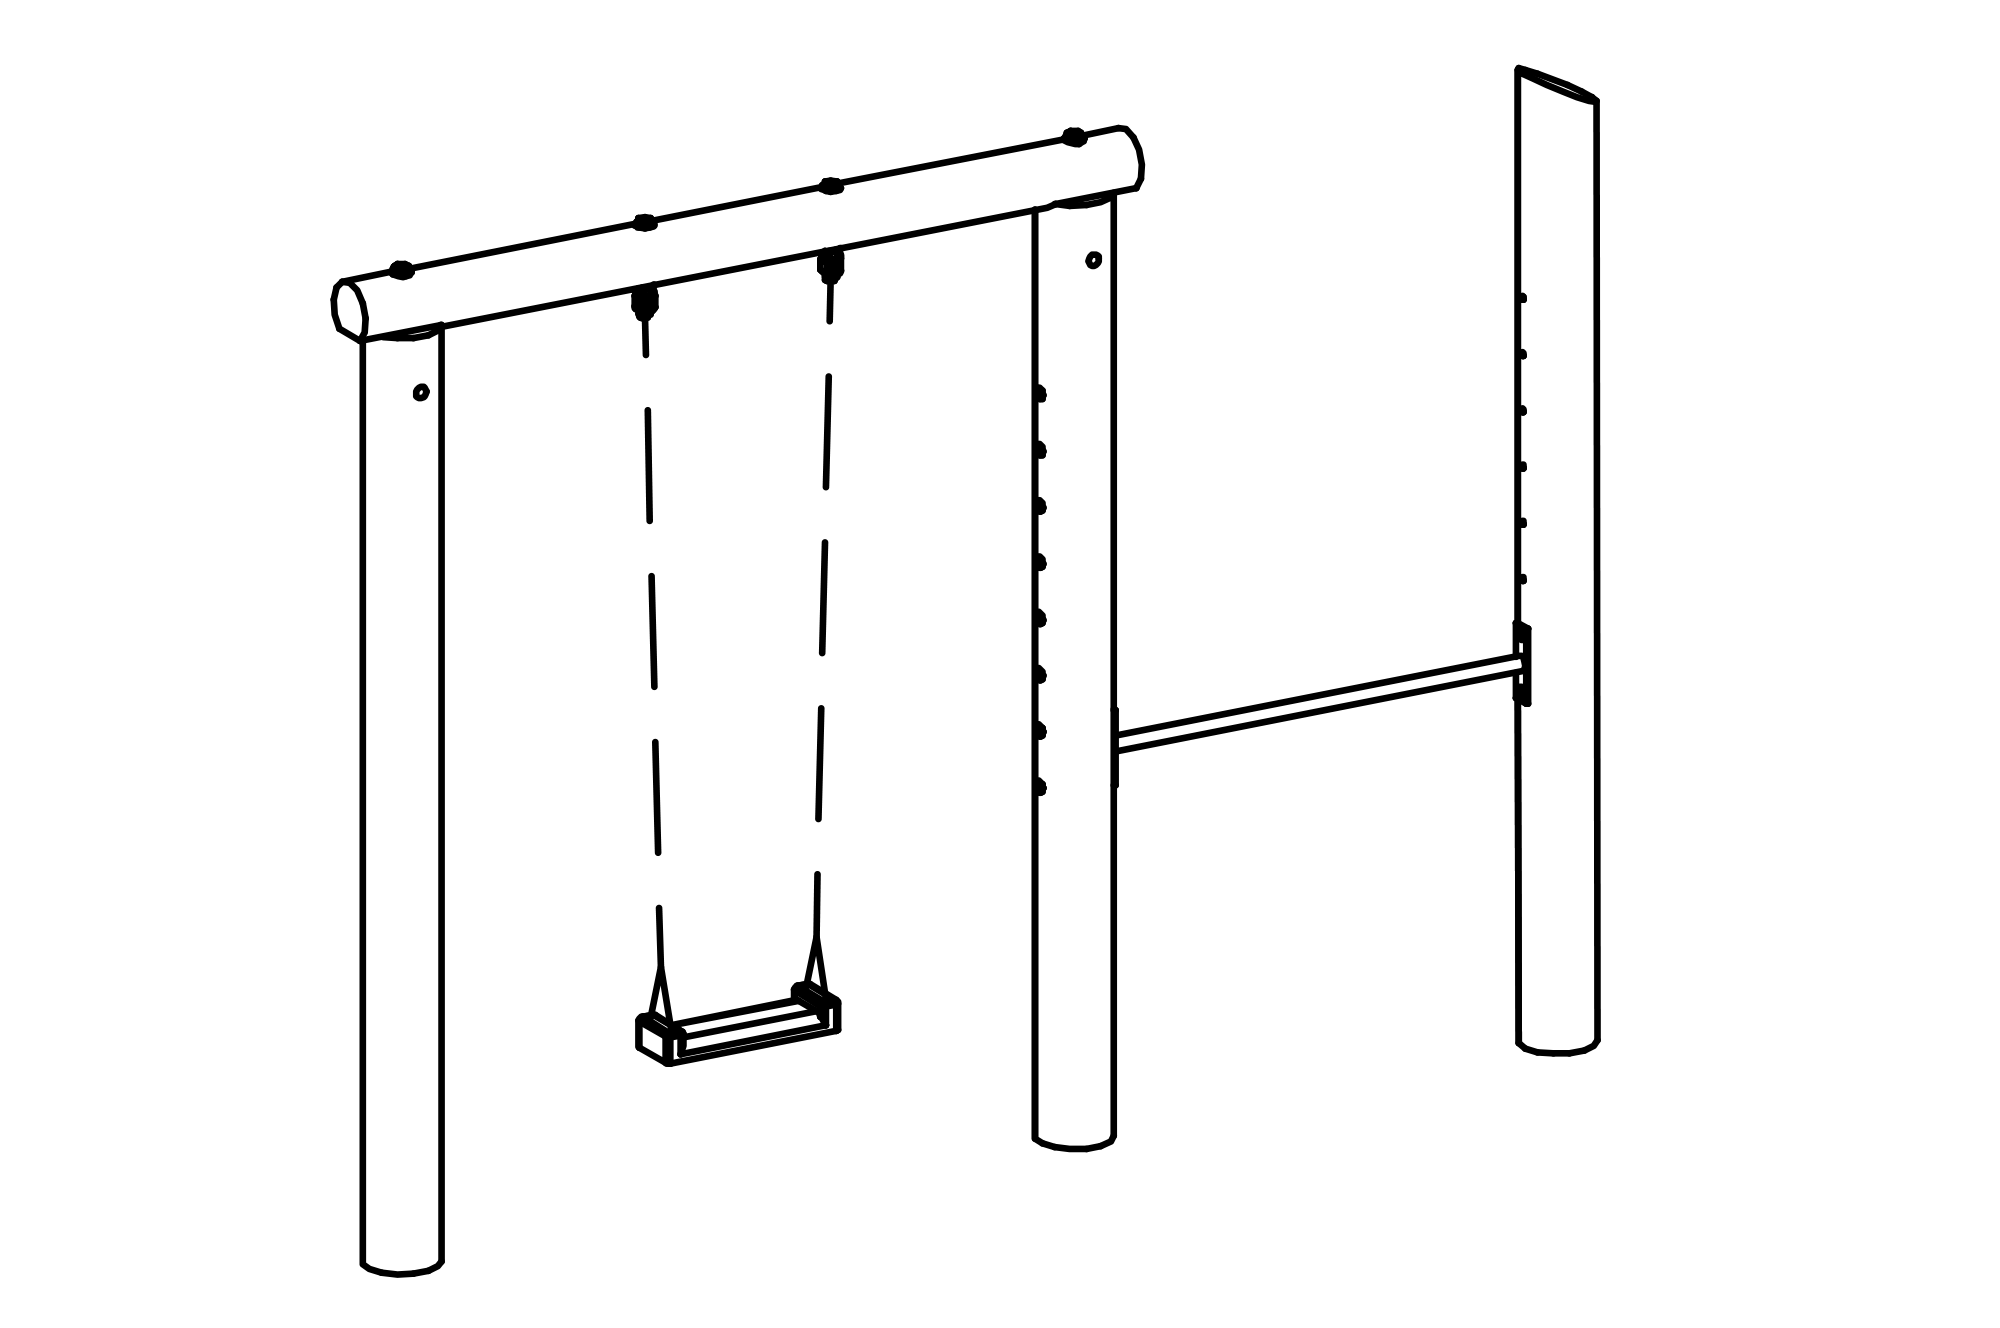 Swing with adjustable horizontal bar